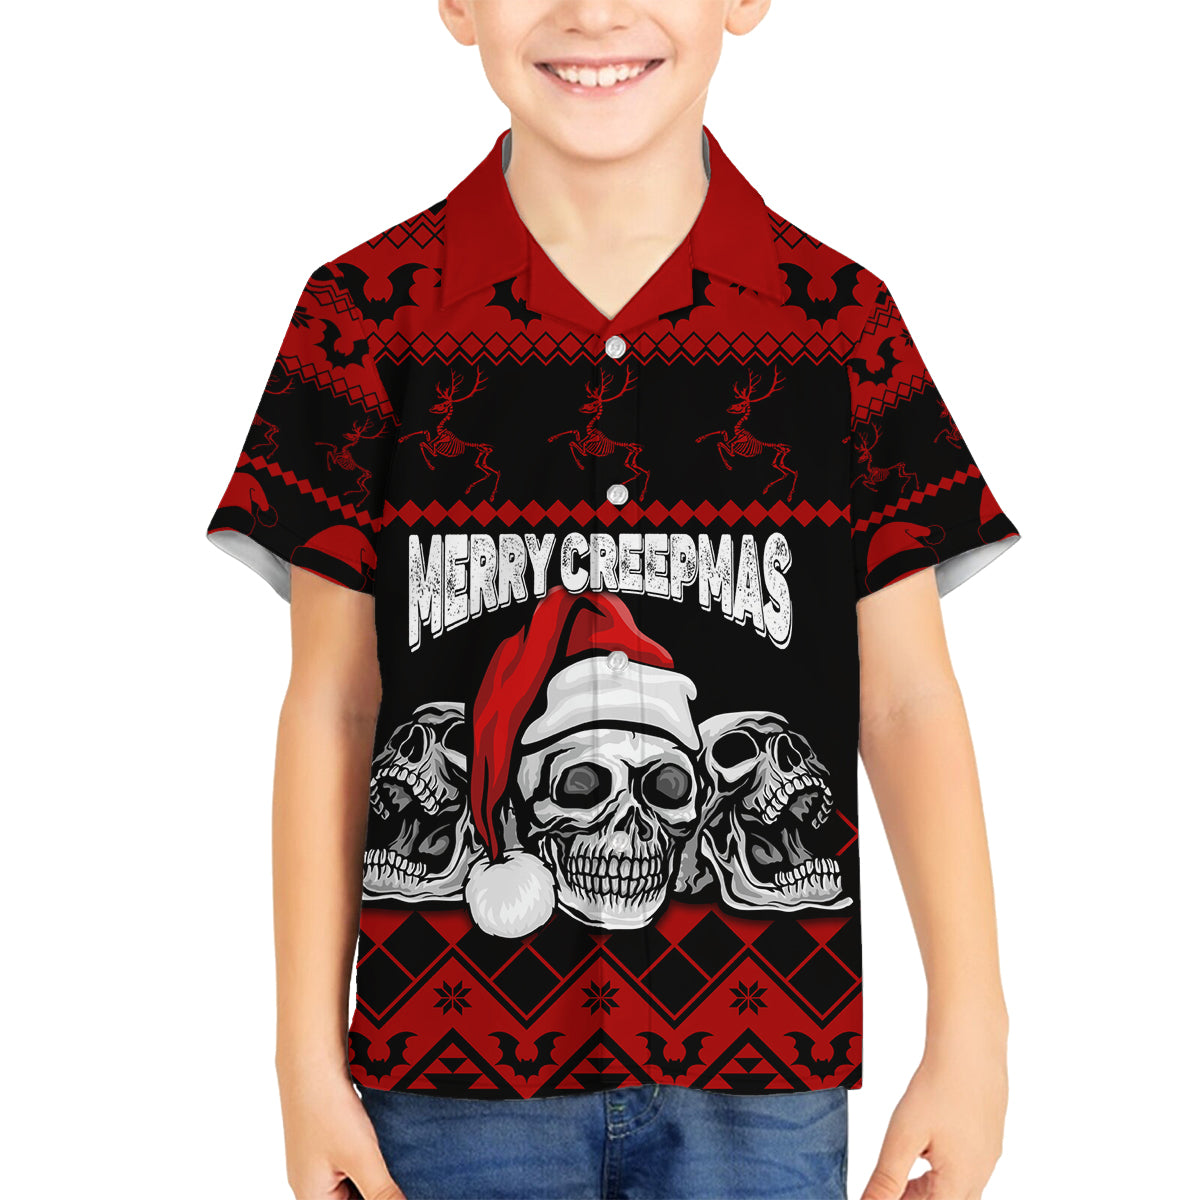 custom-christmas-family-matching-long-sleeve-bodycon-dress-and-hawaiian-shirt-gothic-skull-creepmas